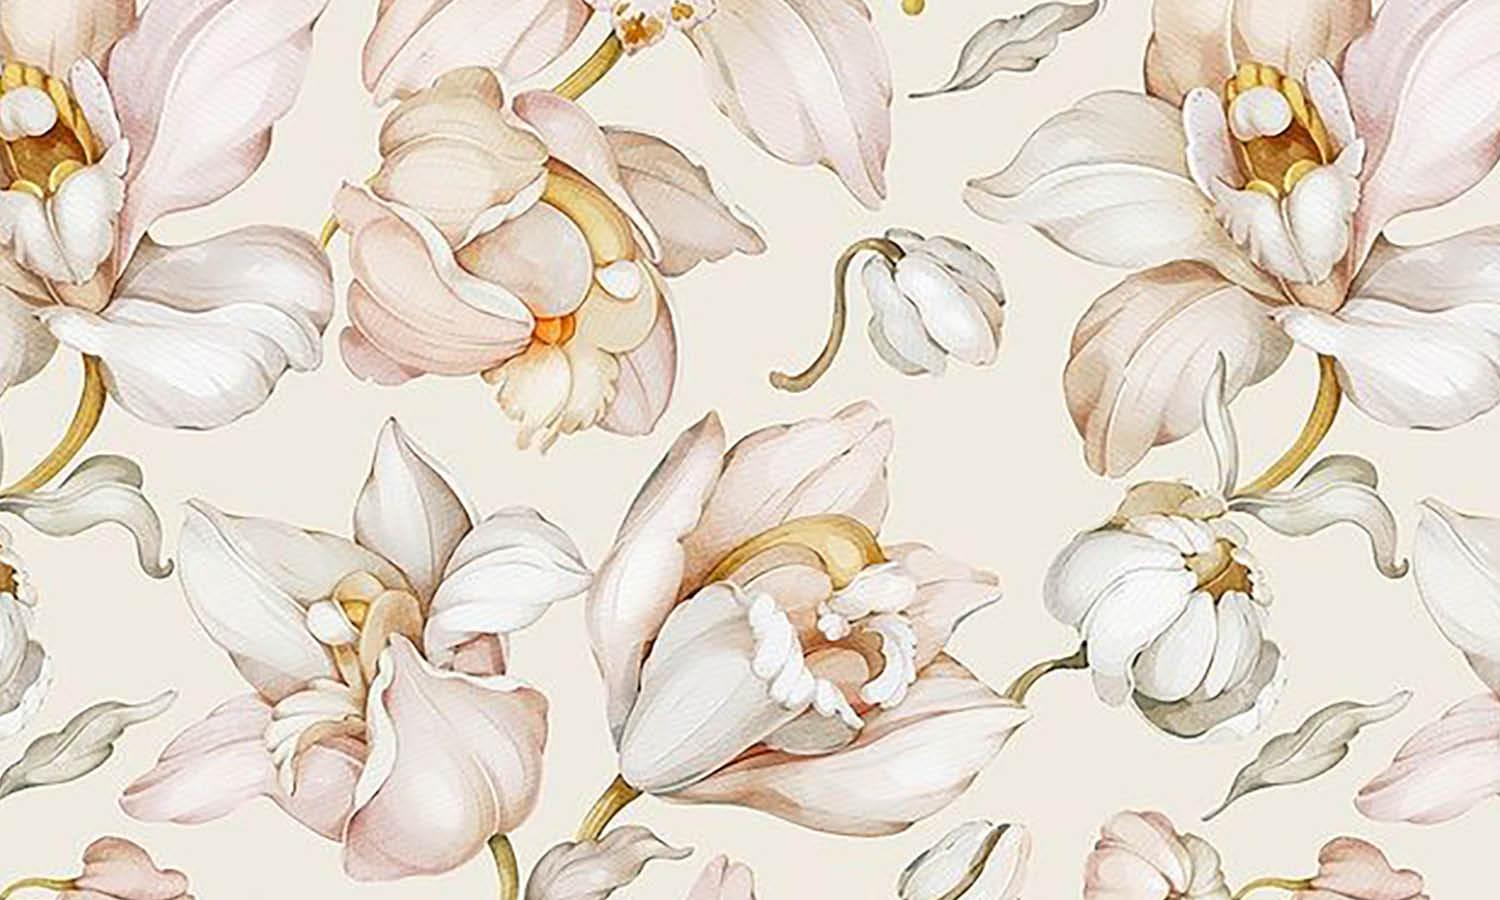 30 Best Orchid Illustration Ideas You Should Check - Kreafolk